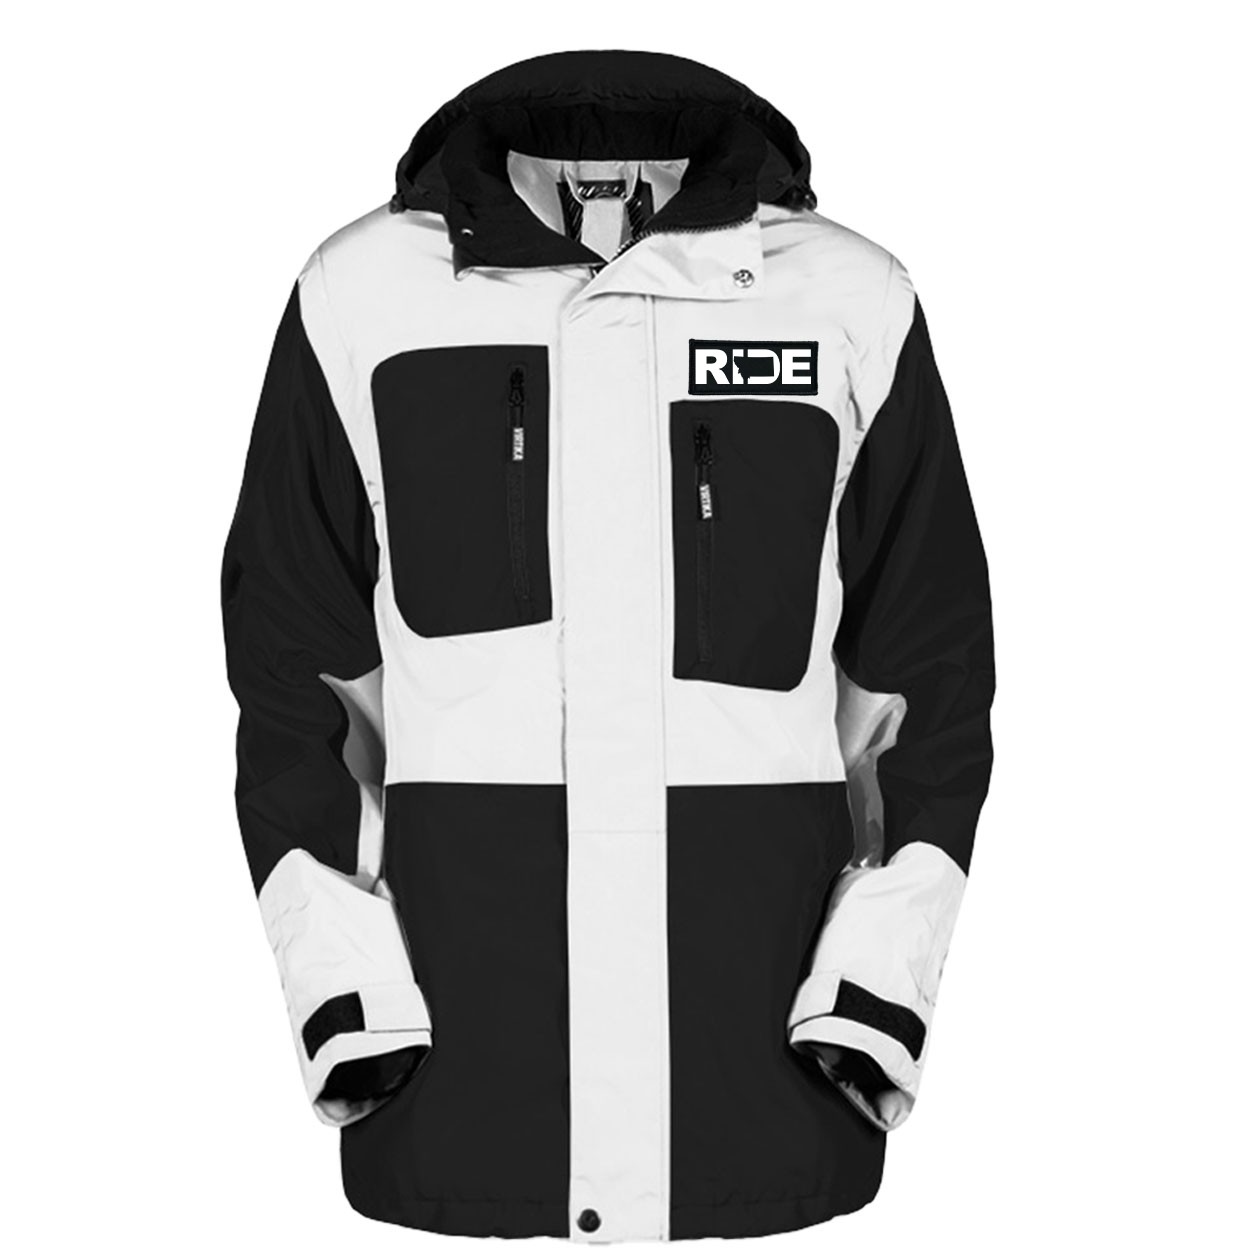 Ride Montana Classic Woven Patch Pro Snowboard Jacket (Black/White)